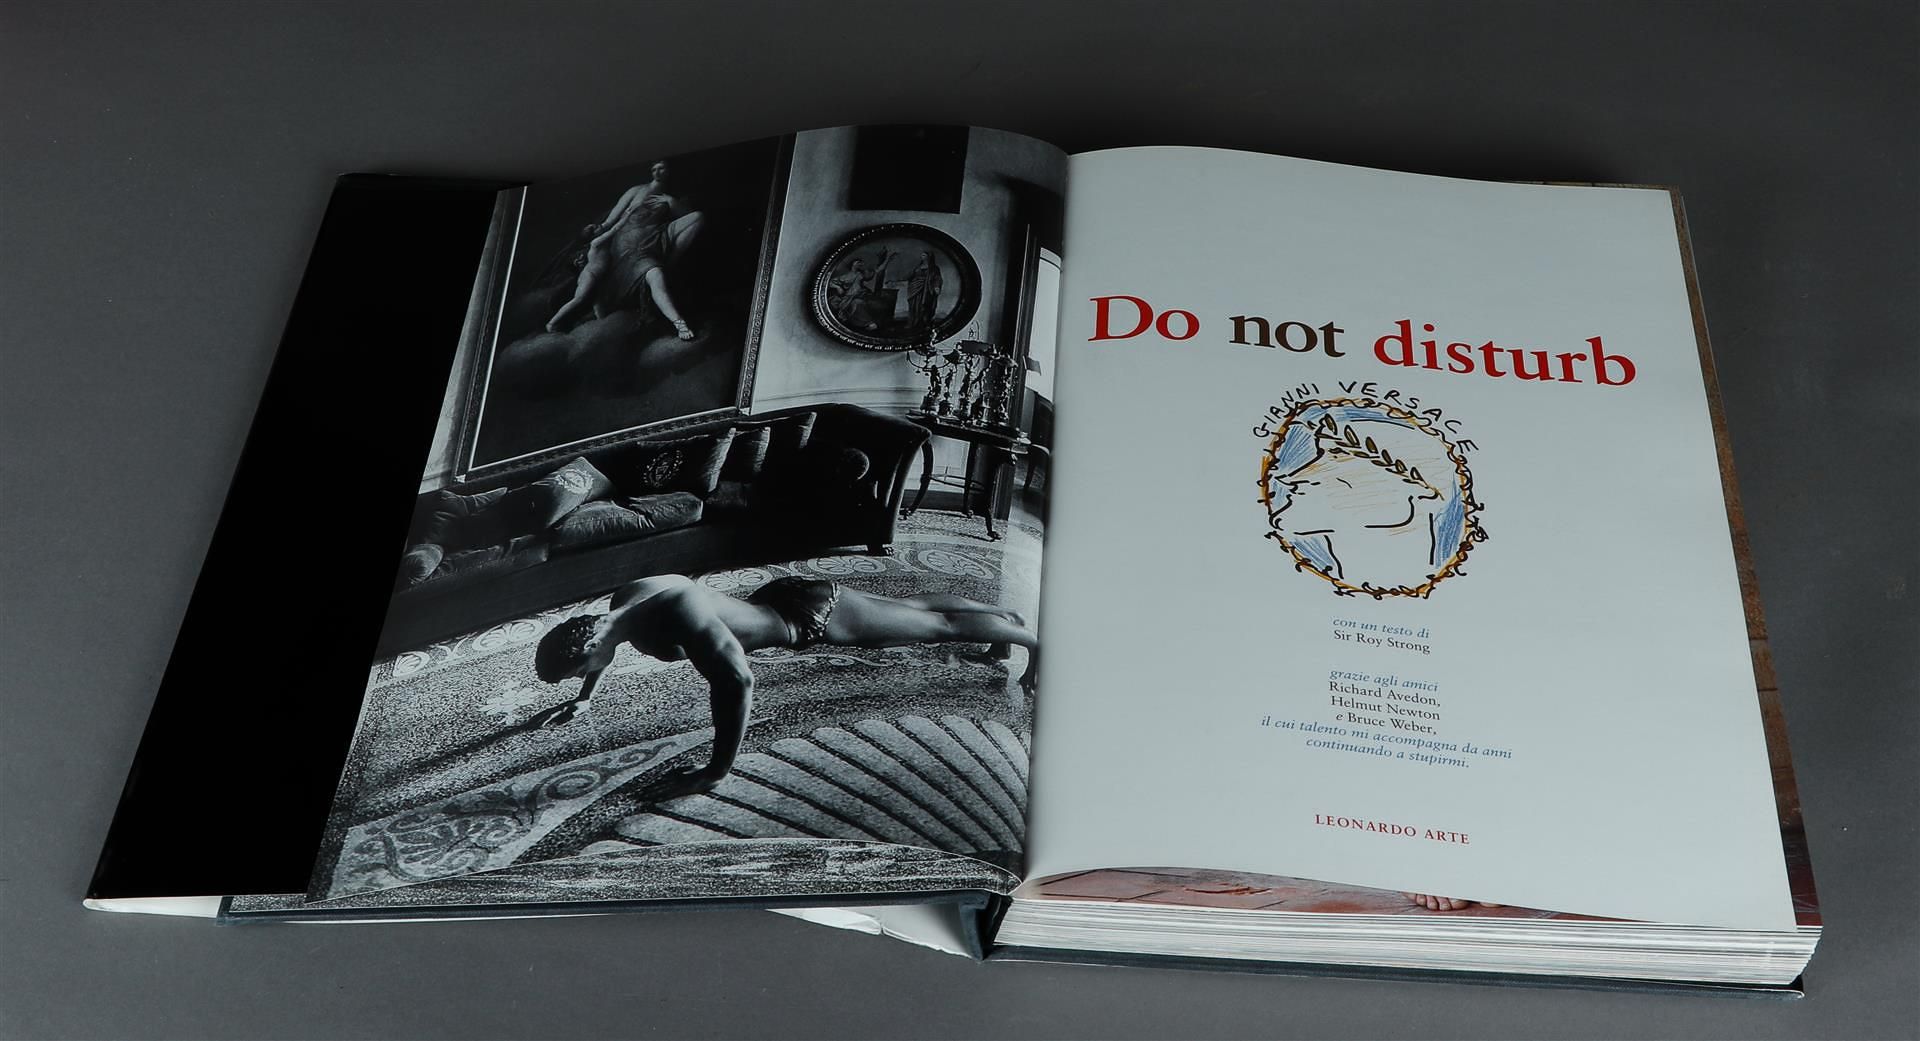 A coffee table book: Gianni Versace - Do Not Disturb, Leonardo Arte, 1995. - Image 2 of 3